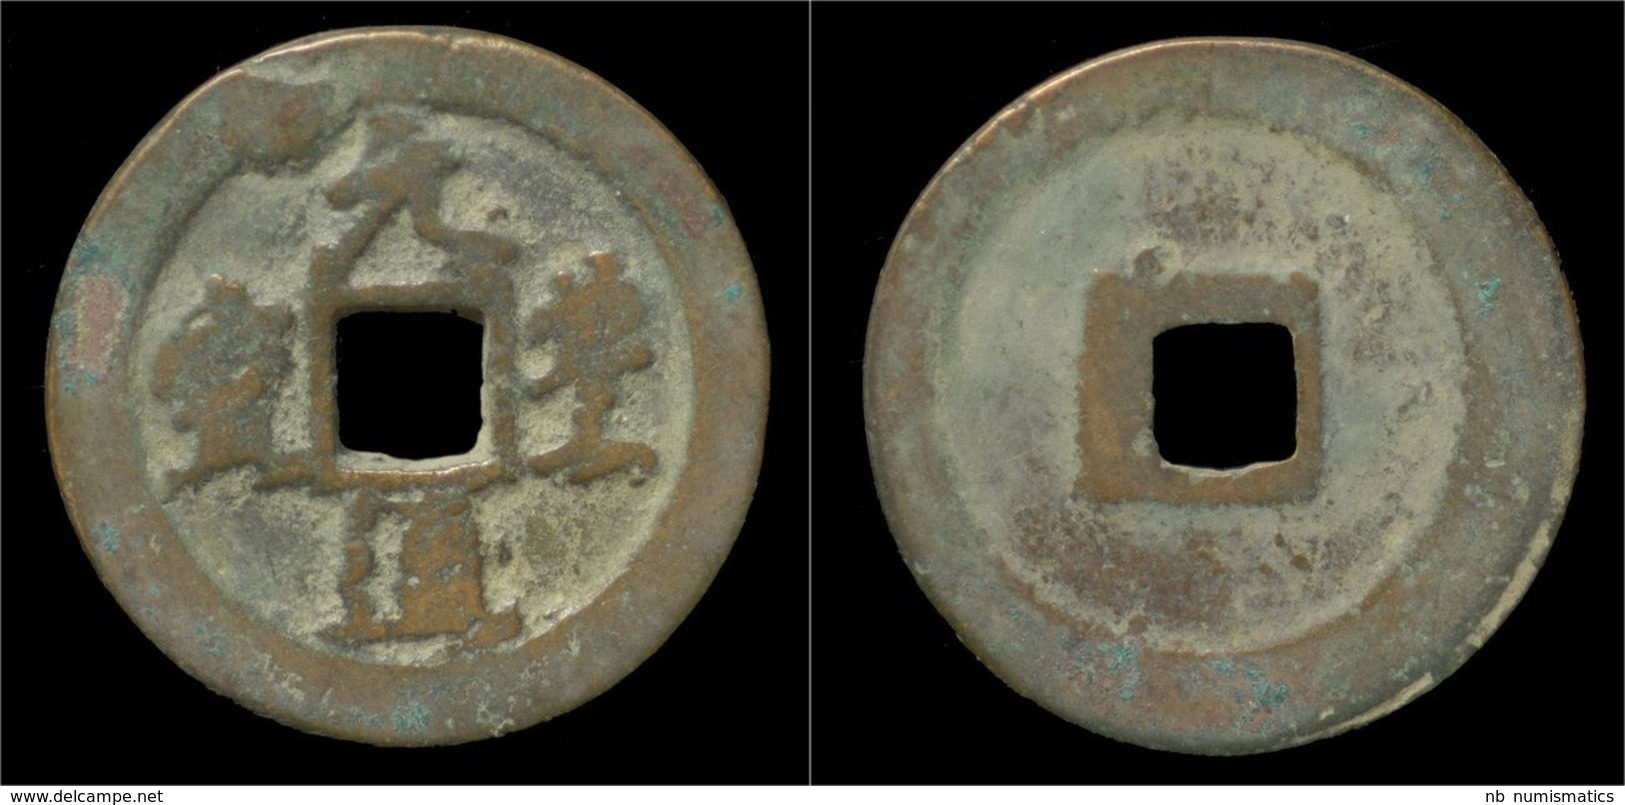 China Northern Song Dynasty Emperor Shen Zong AE 3-cash - Chinesische Münzen